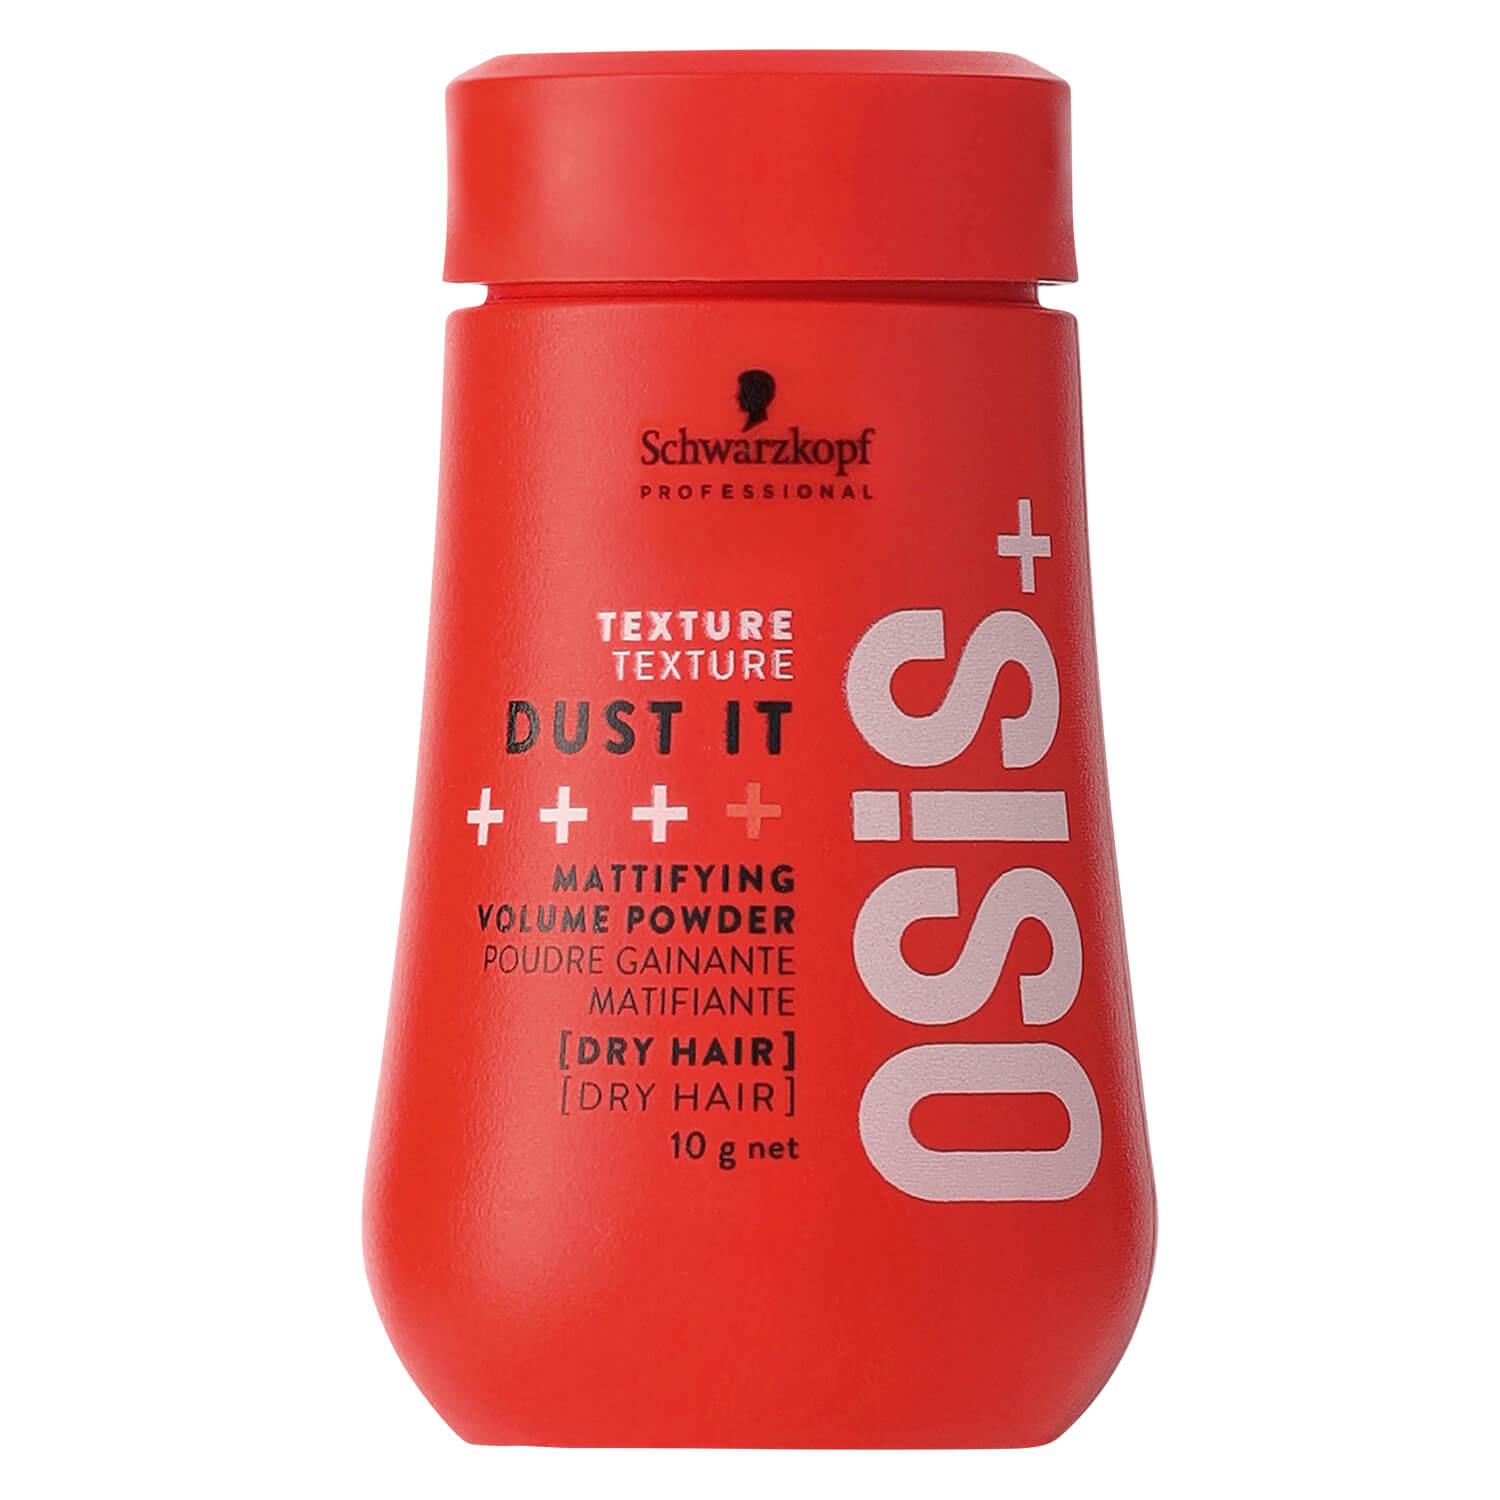 Osis - Dust it Mattifying Volume Powder